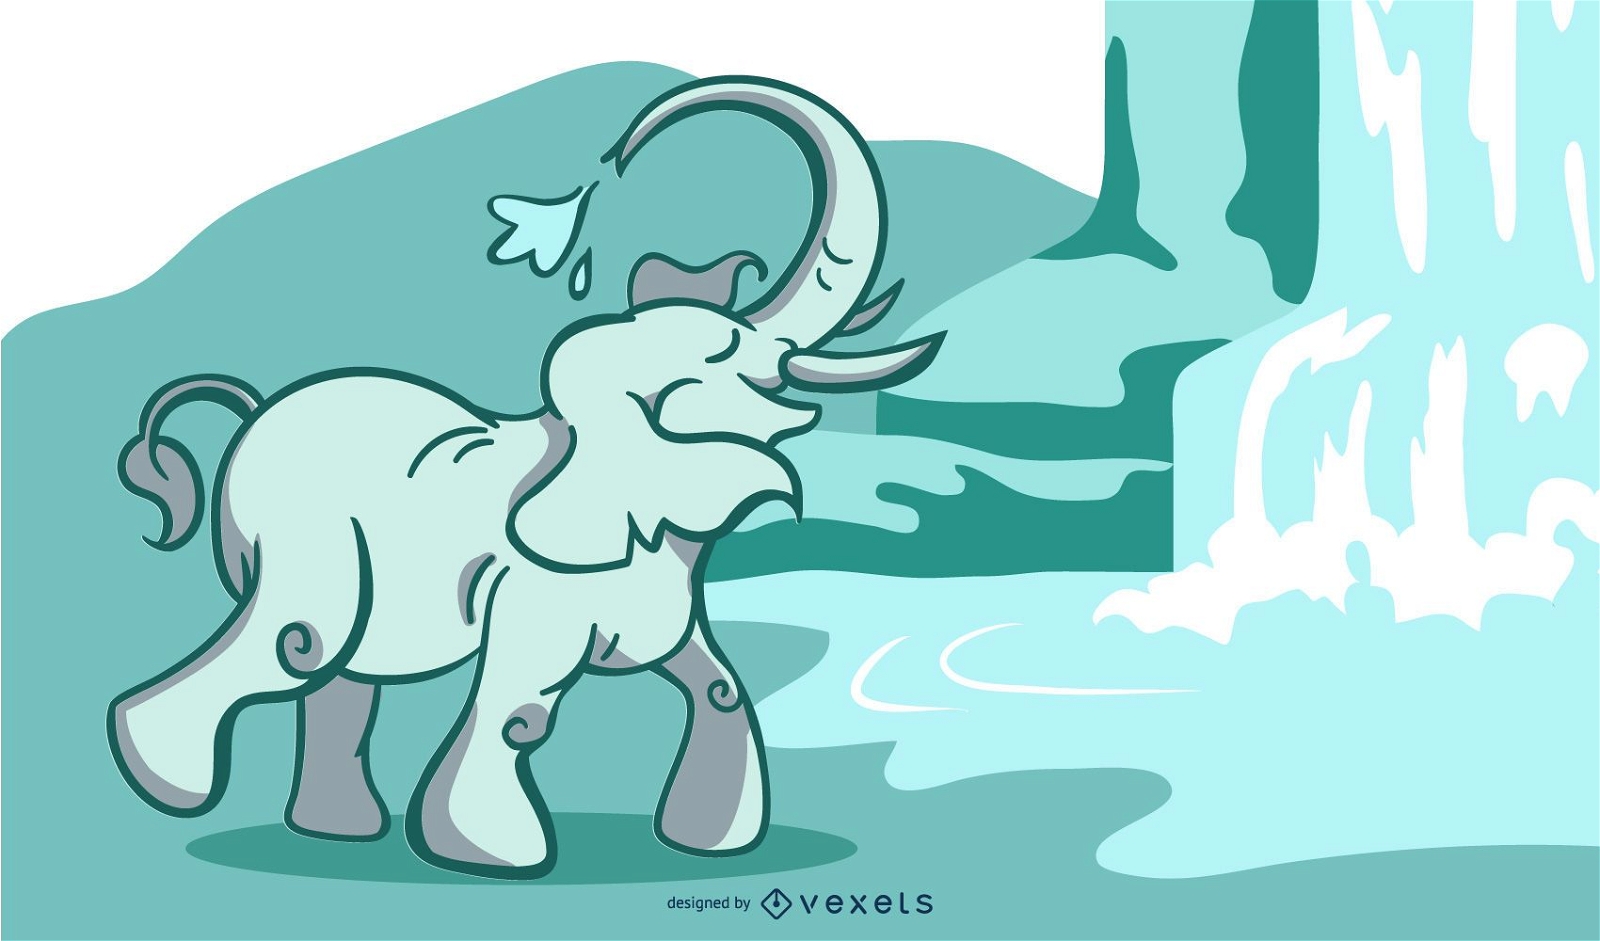 Elephant waterfall illustration 